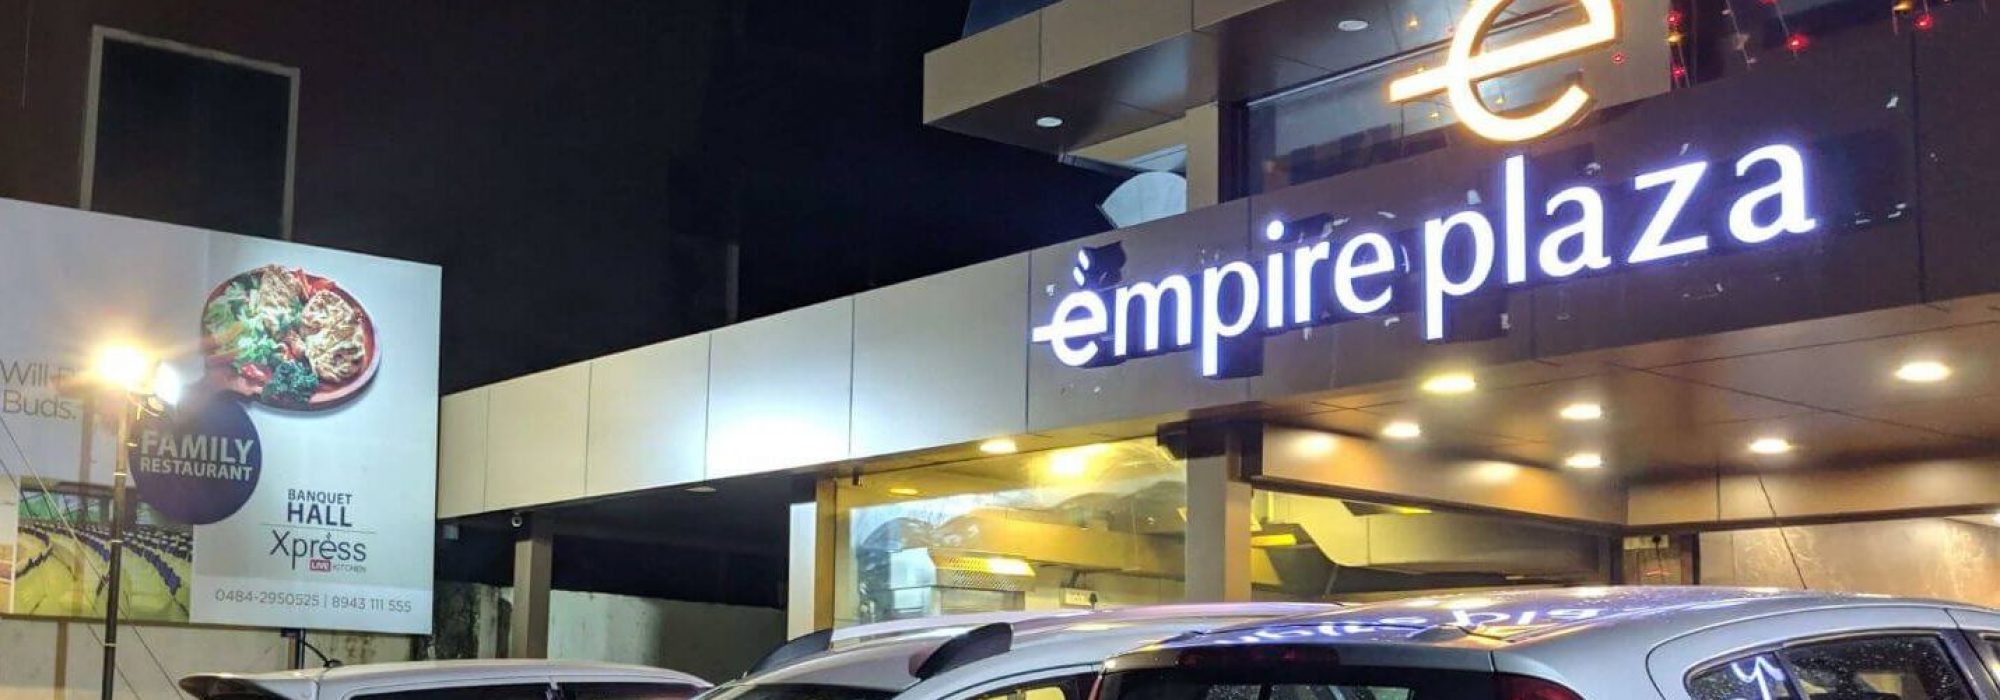 empire plaza restaurant